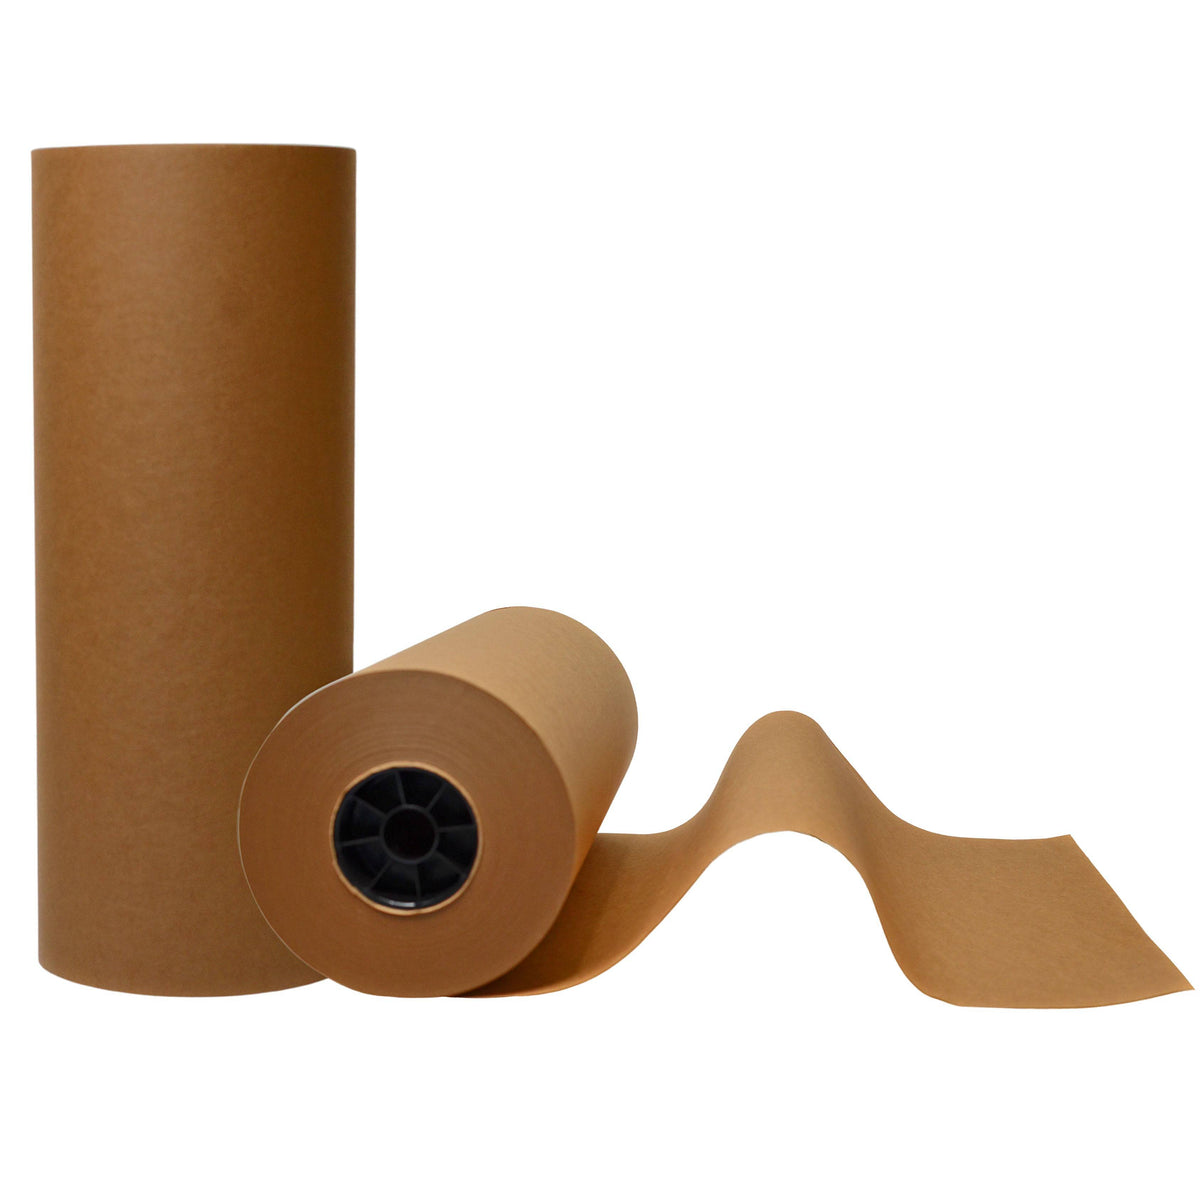 Brown Kraft Paper 36In Wide Roll